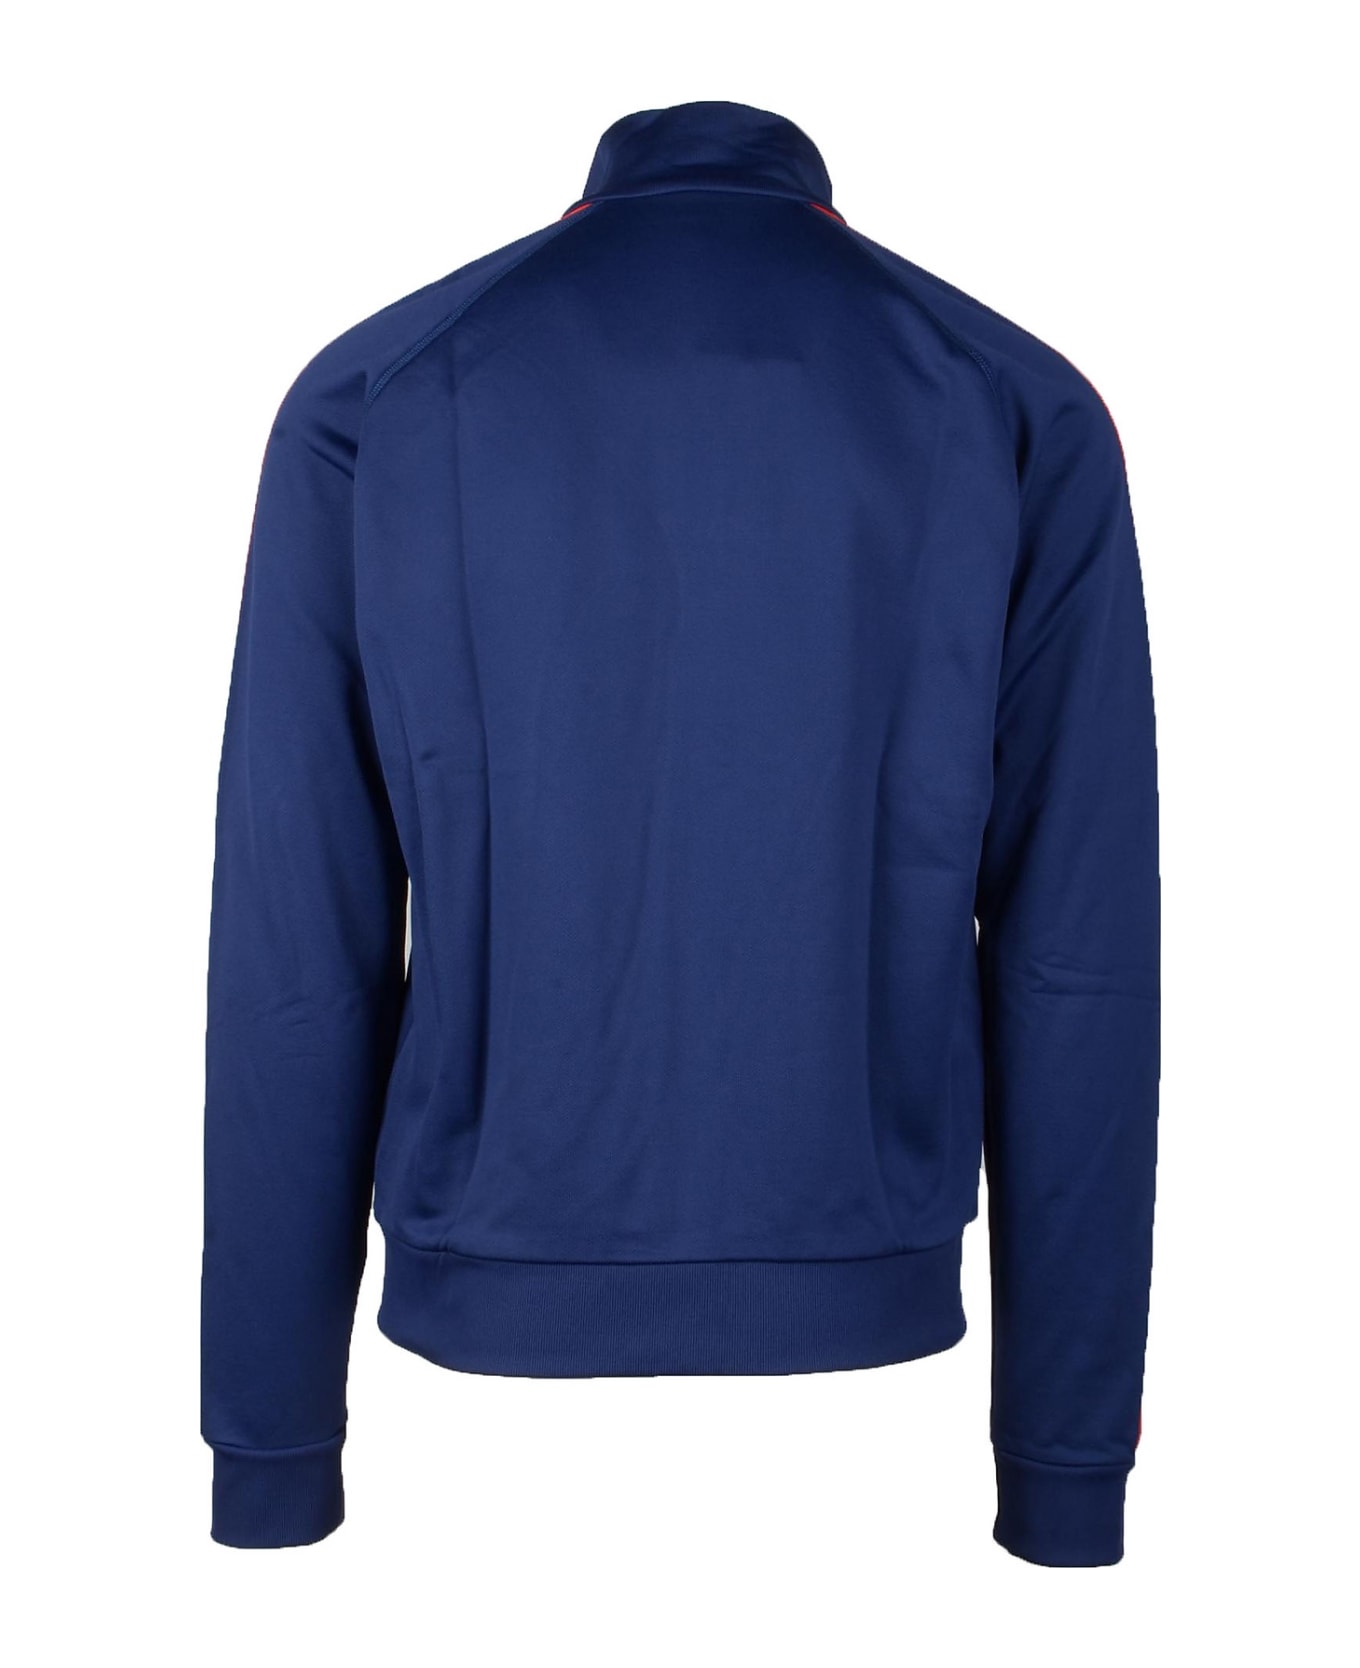 Dsquared2 Men's Navy Blue Sweatshirt - Navy Blue